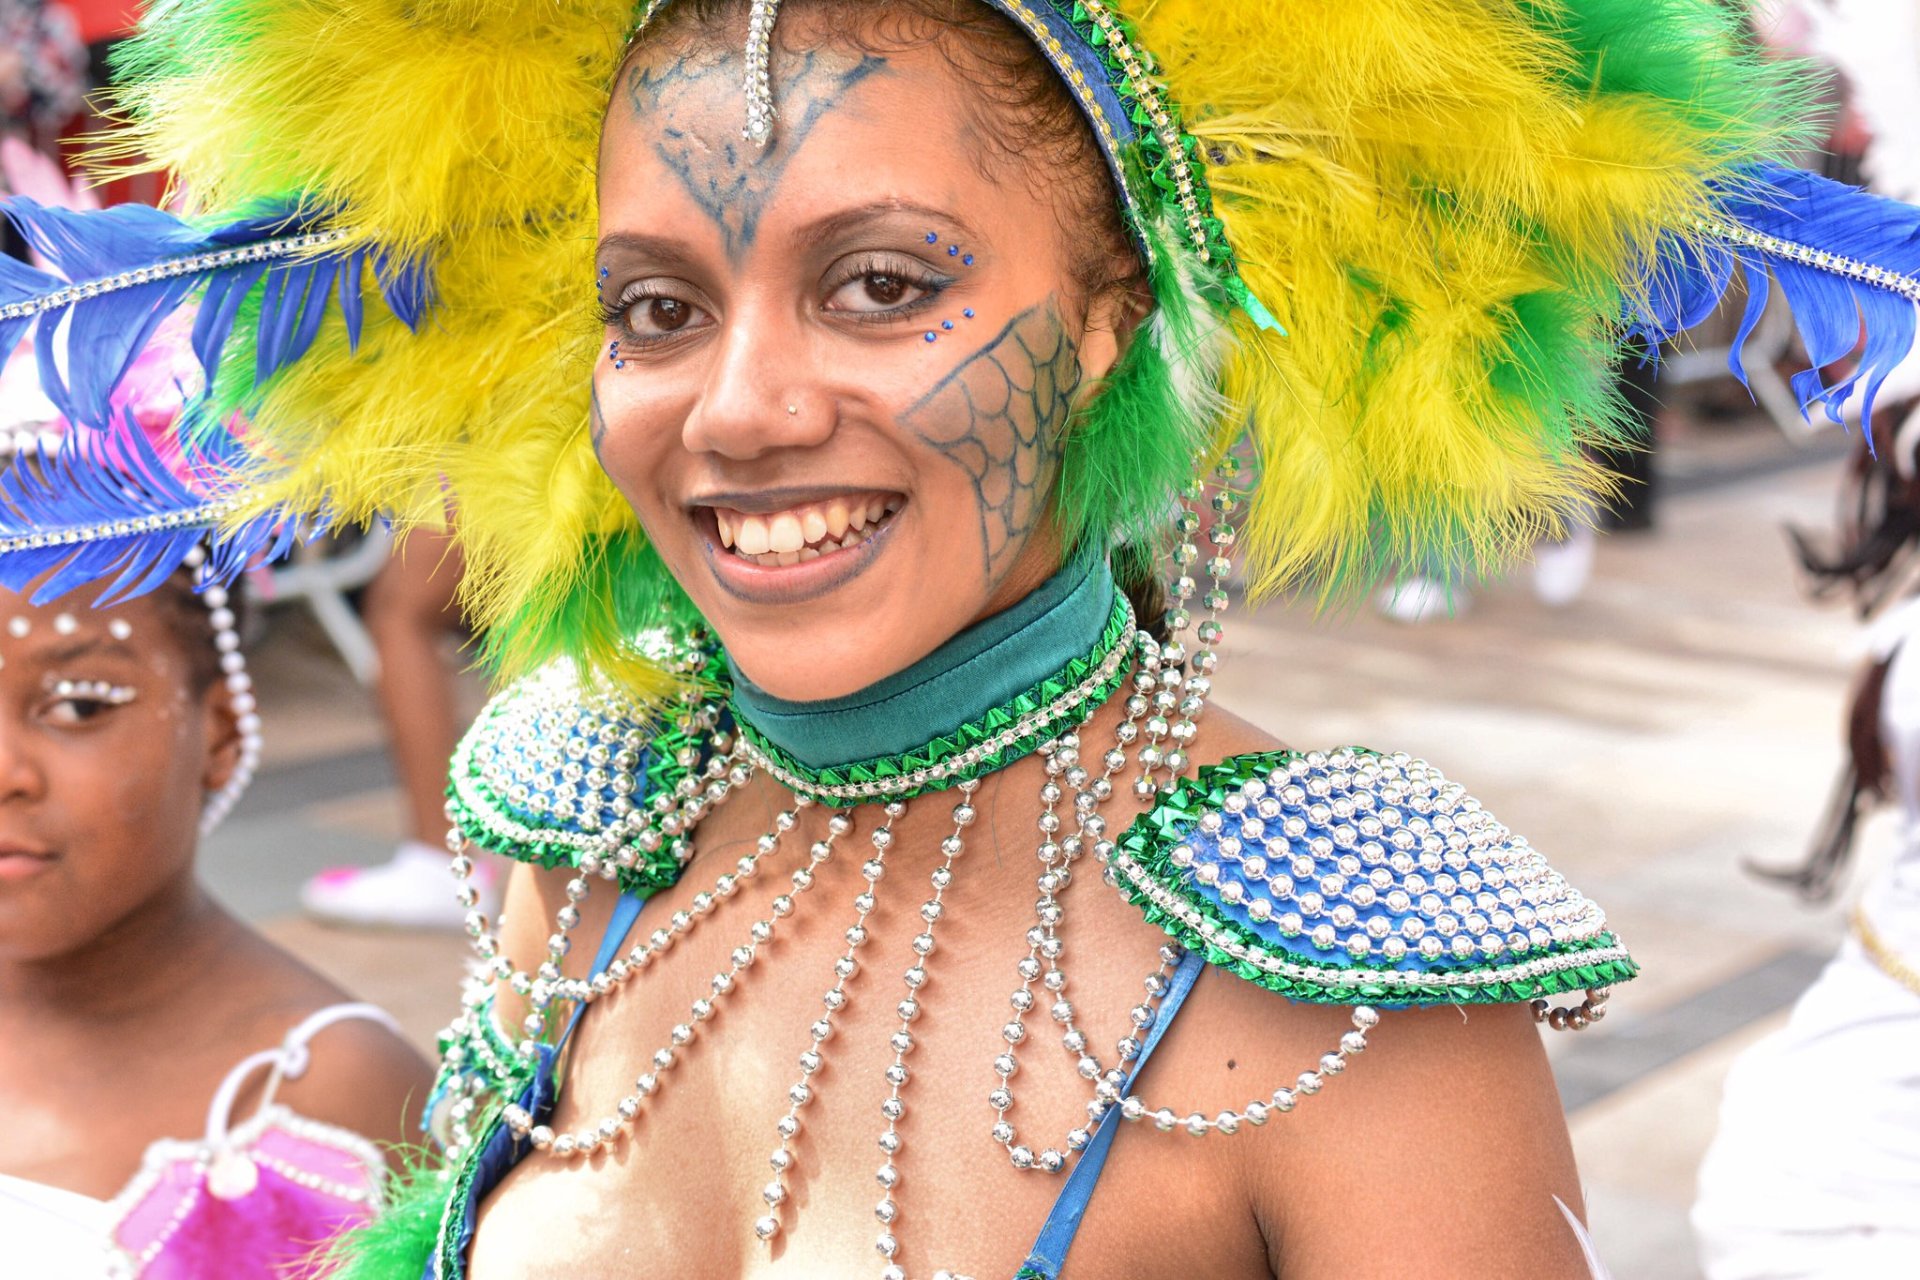 Leicester Caribbean Carnival